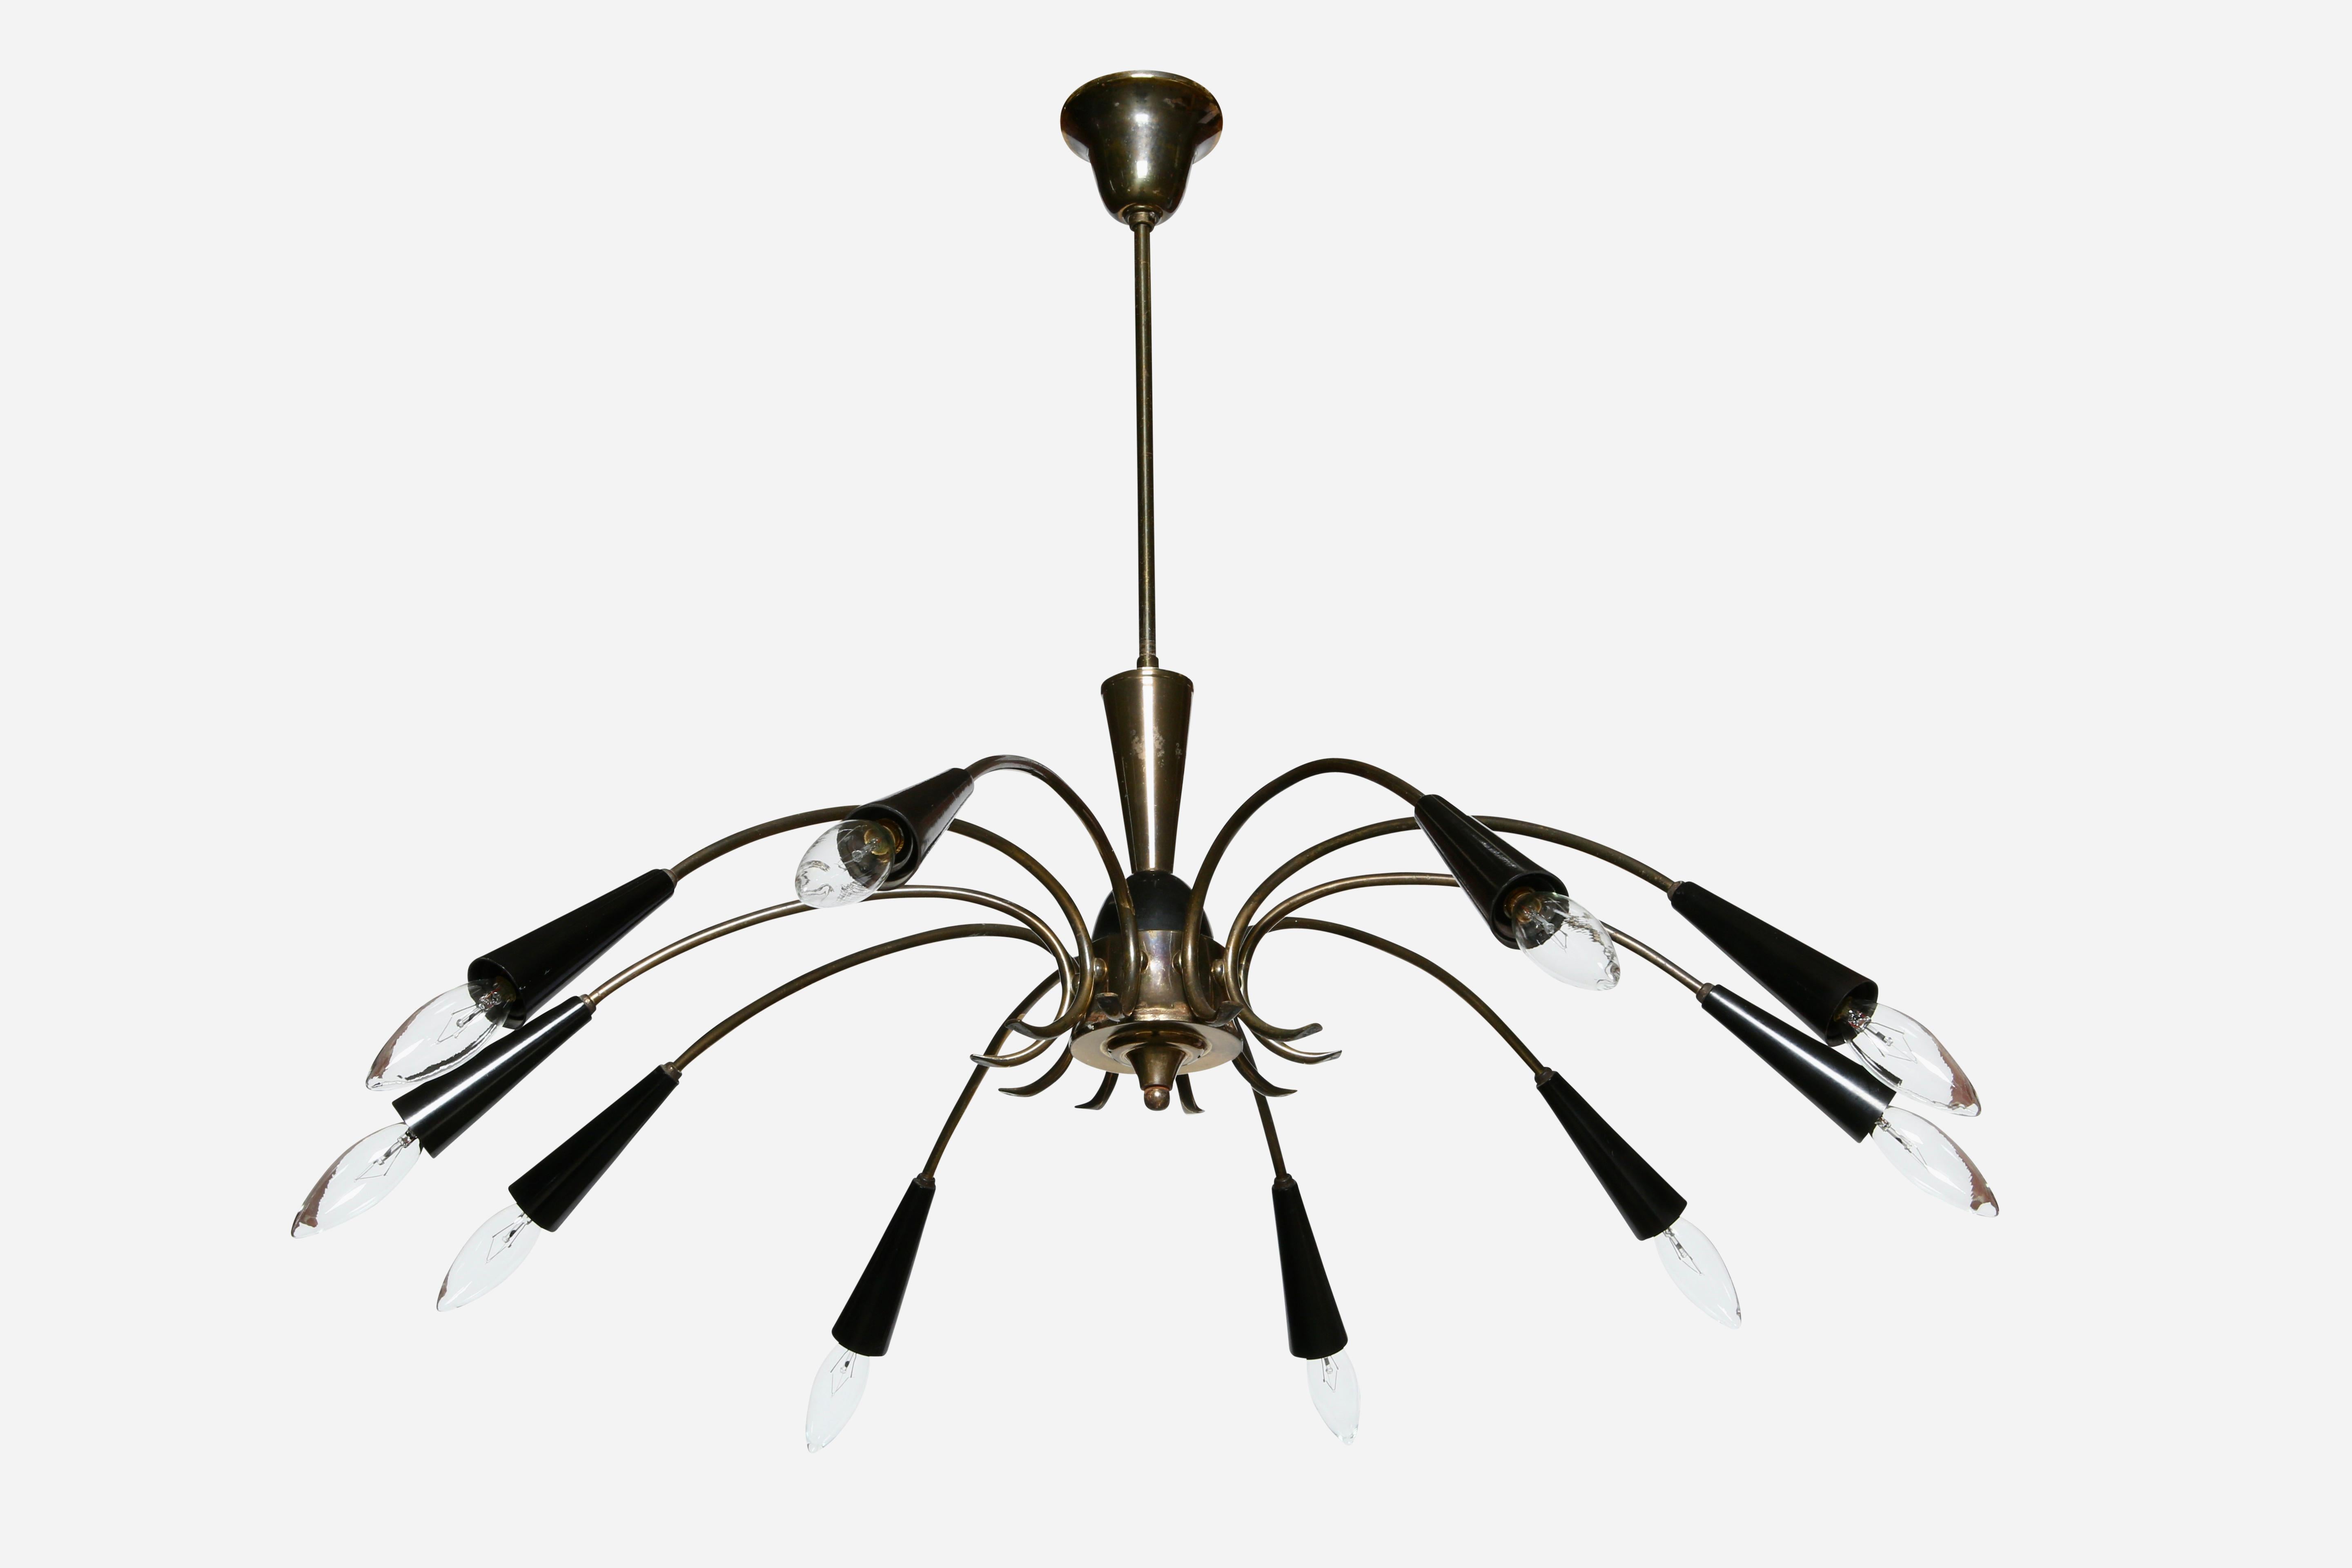 Sputnik brass chandelier
Germany, 1960s
10 arms with candelabrum sockets.